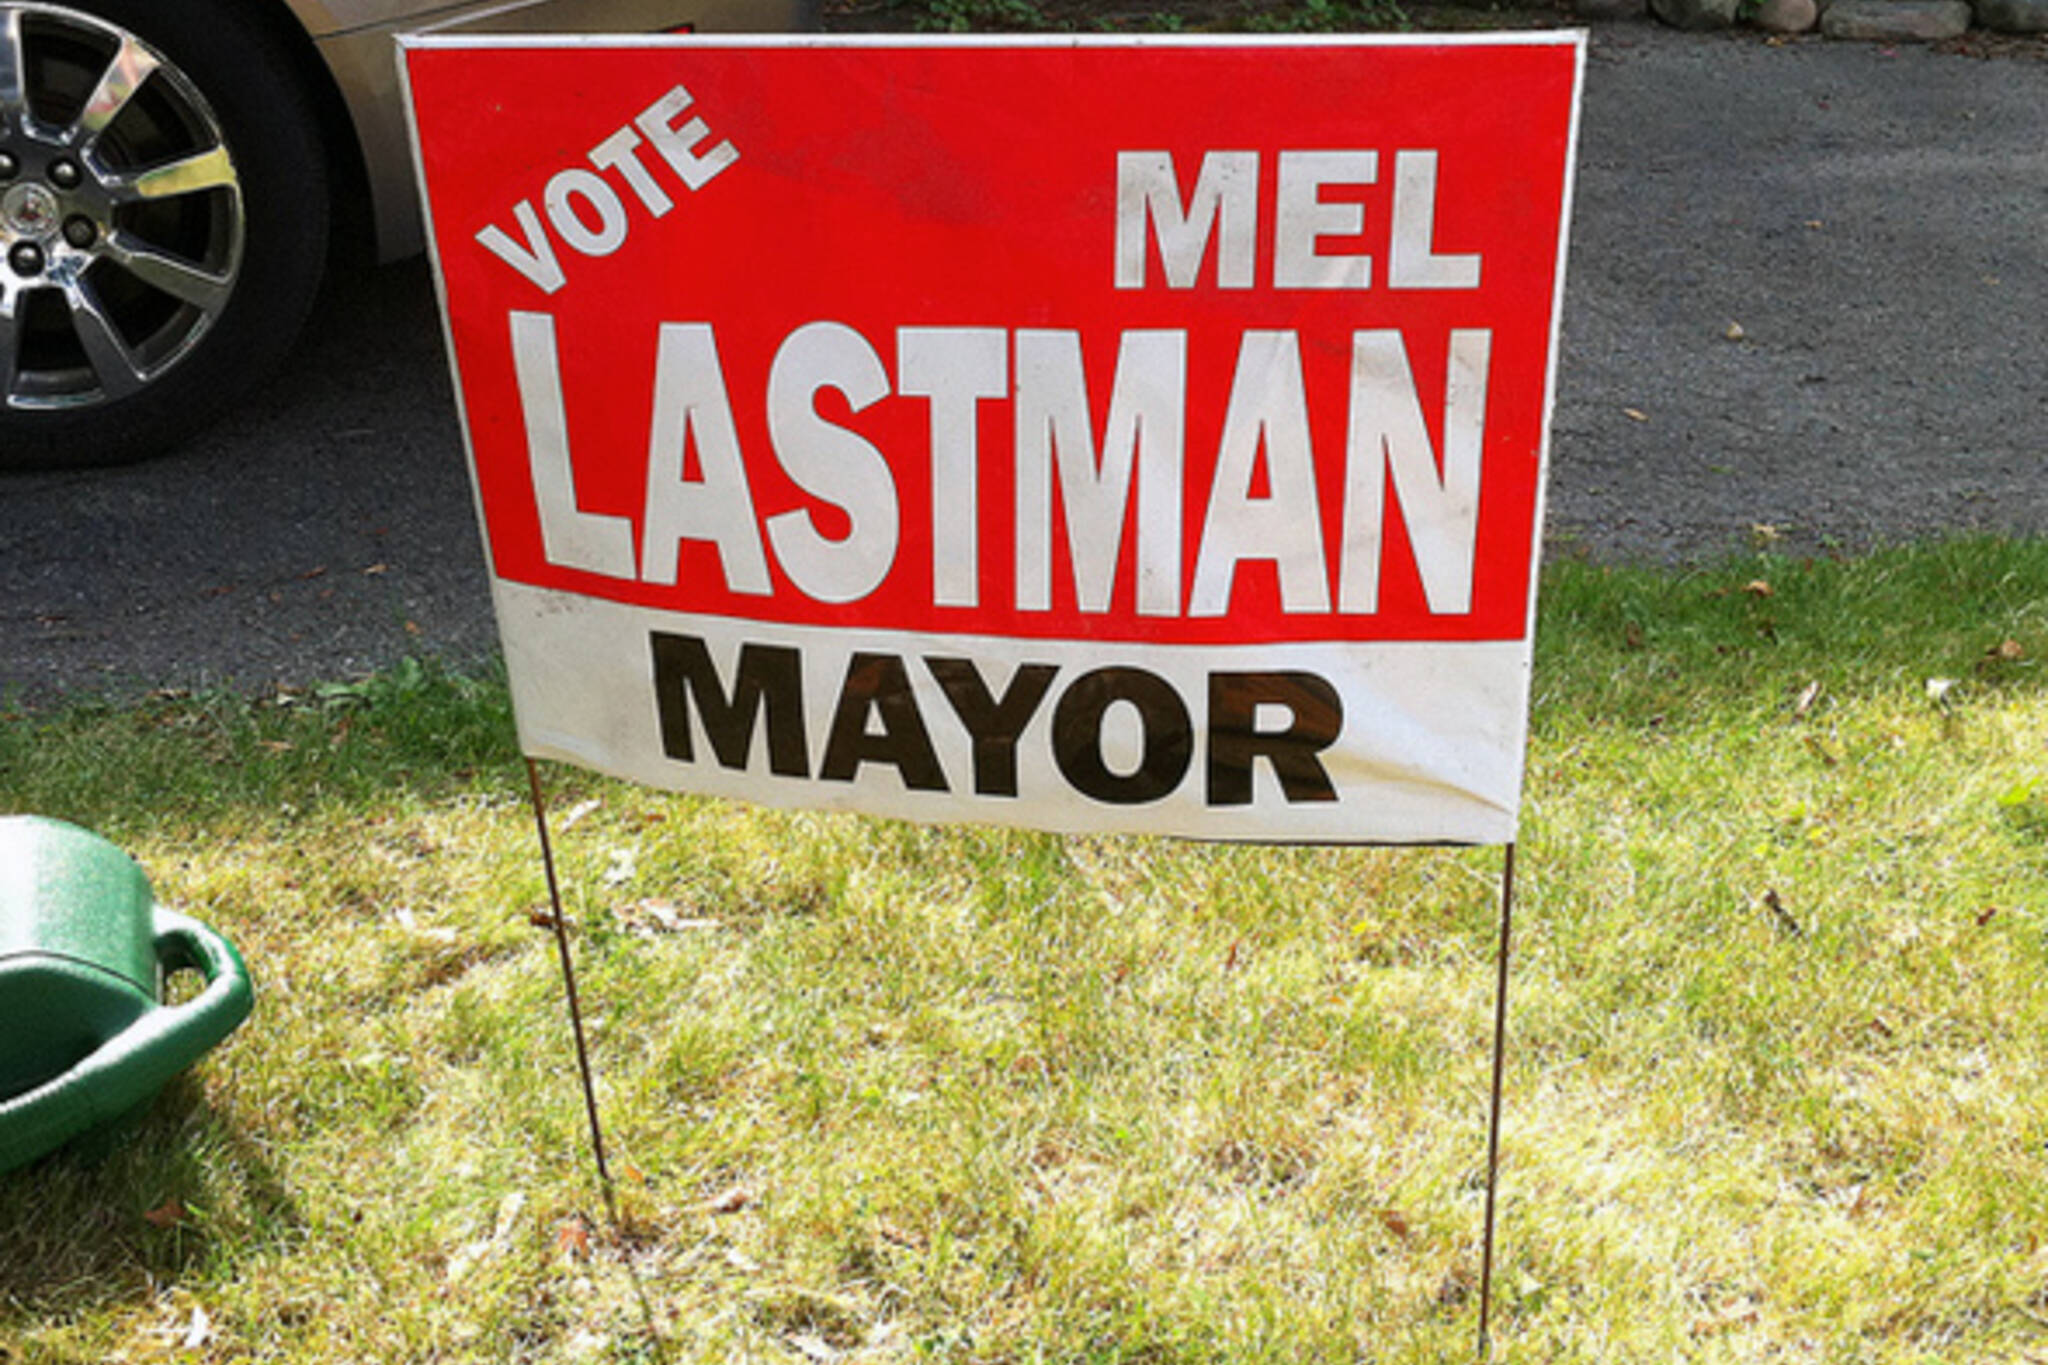 Mel Lastman Mayor